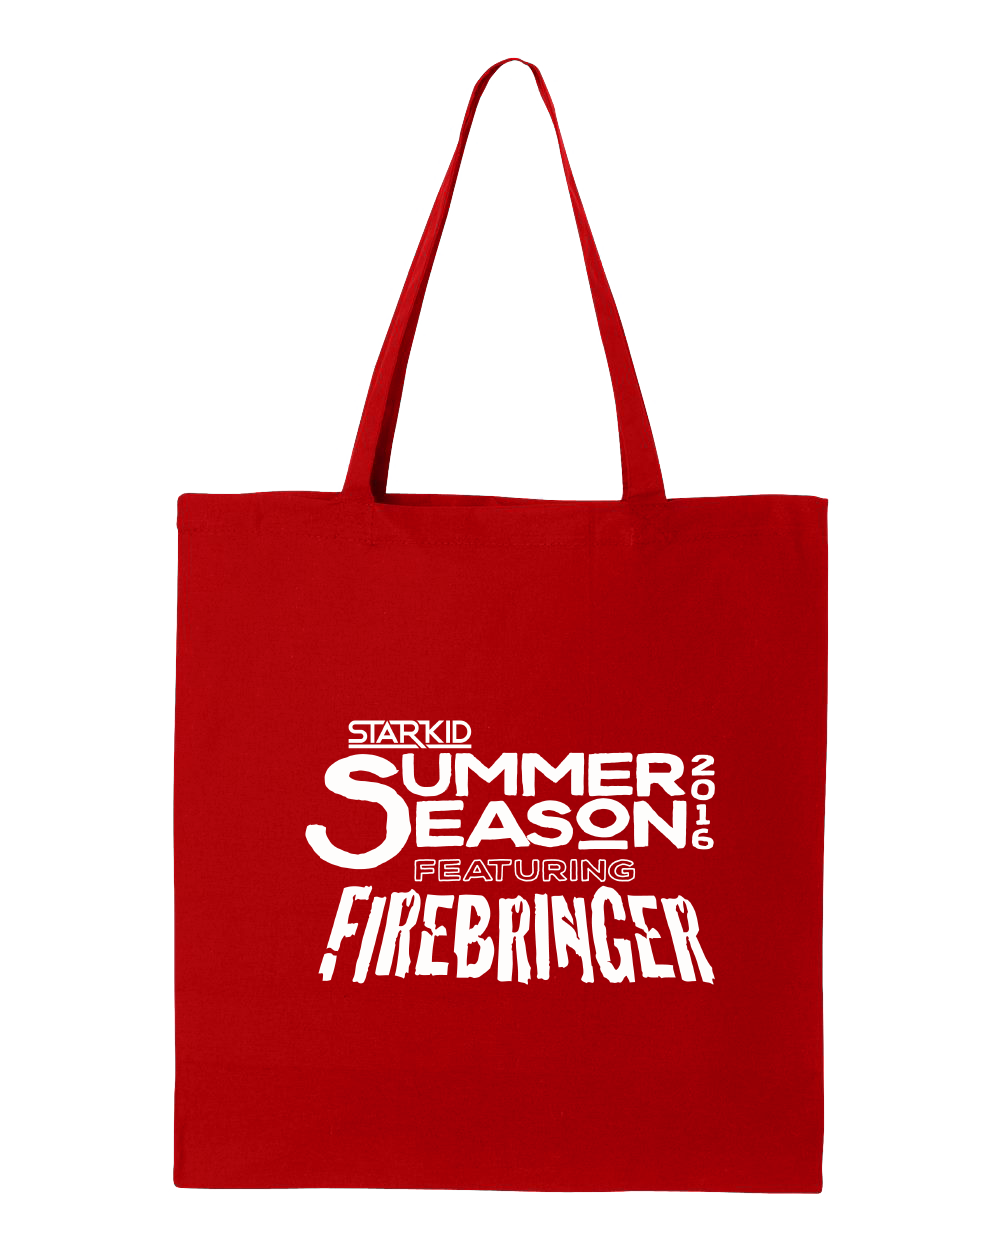 Tote Red Firebringer Summer Season 2016 Tote